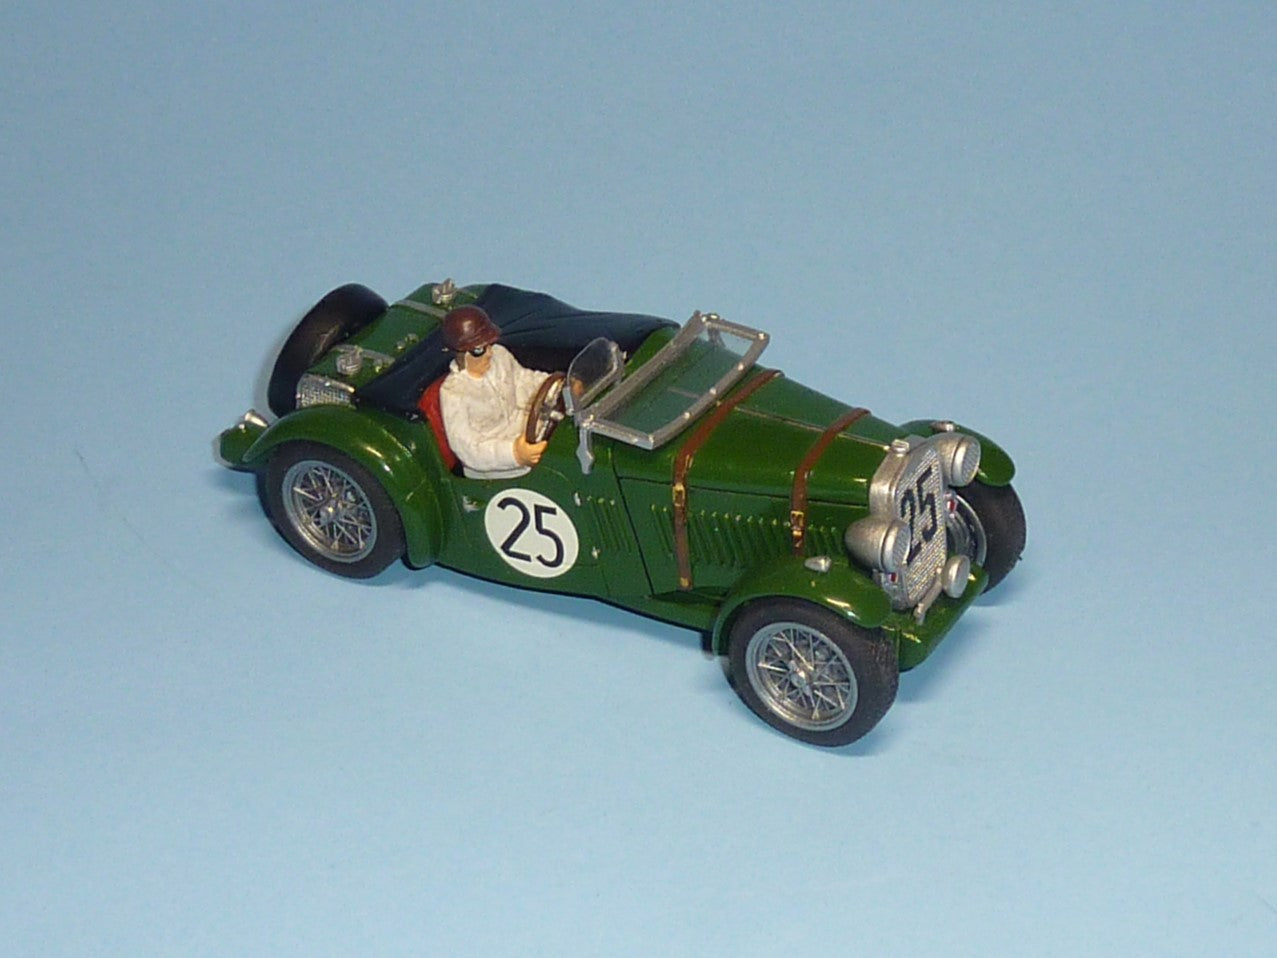 Singer 9, 1934 Le Mans Car (SAL-192)